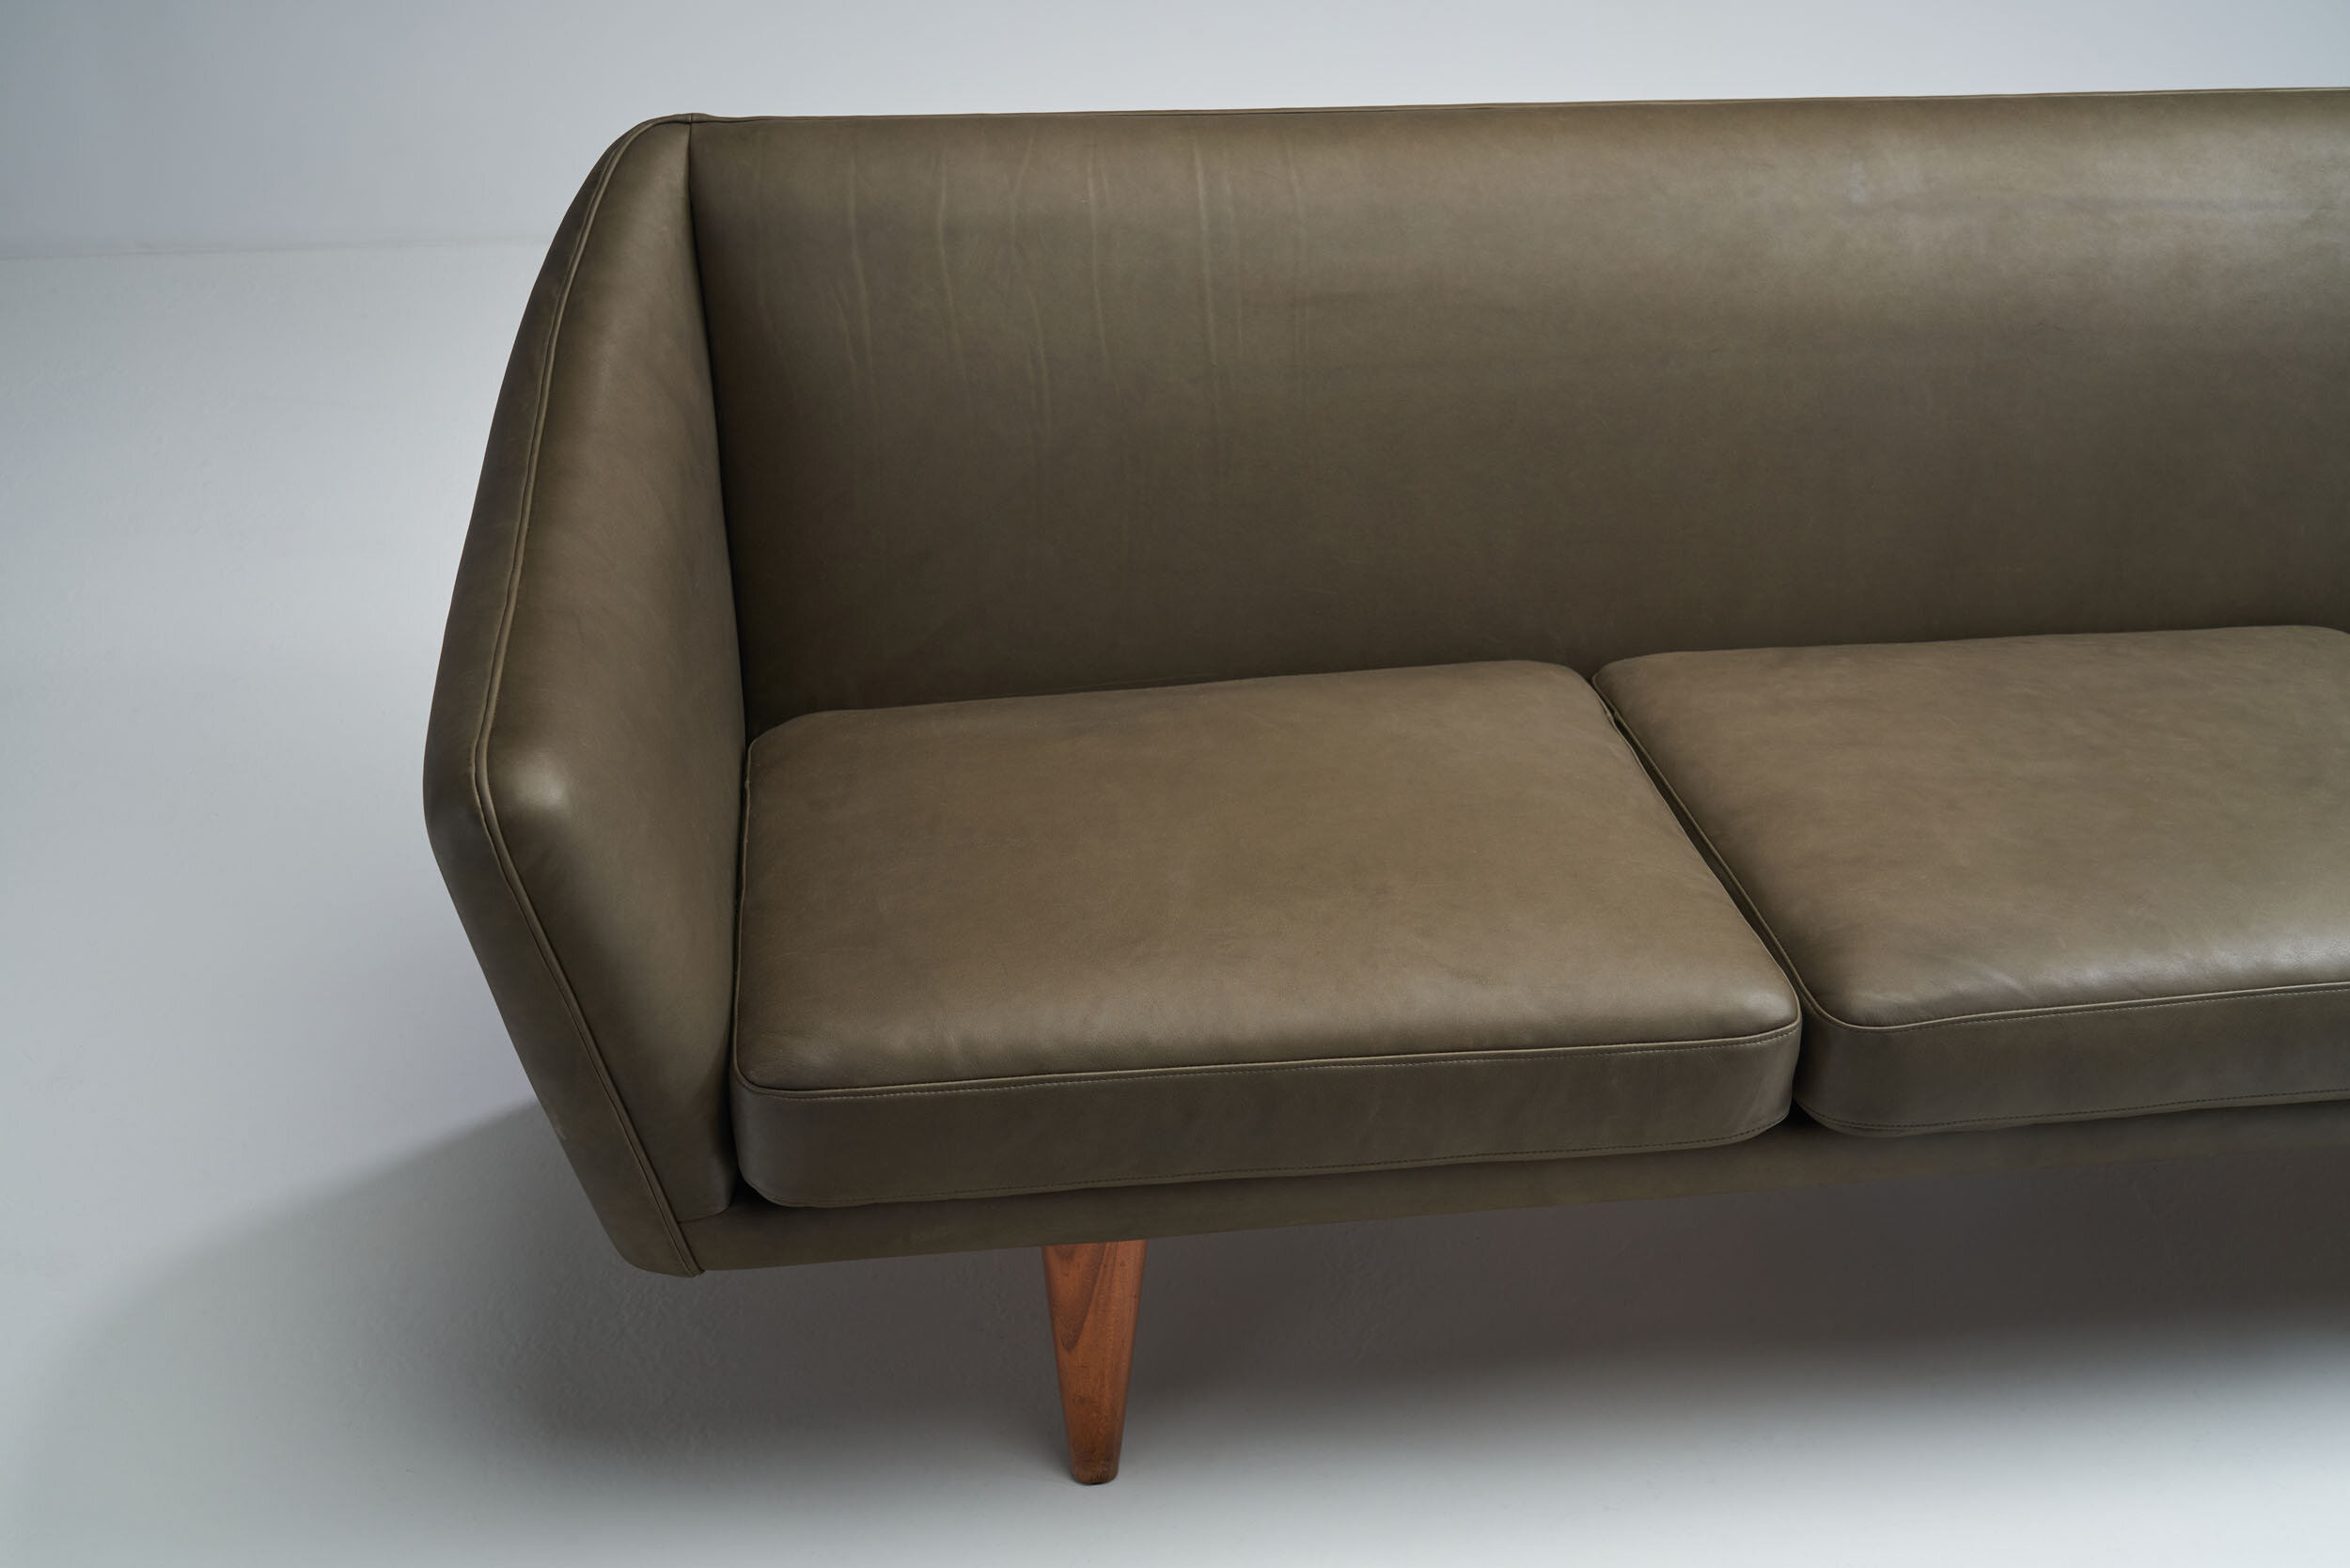 Illum Wikkelsø “ML140” Three-Seater Sofa for A. Mikael Laursen 